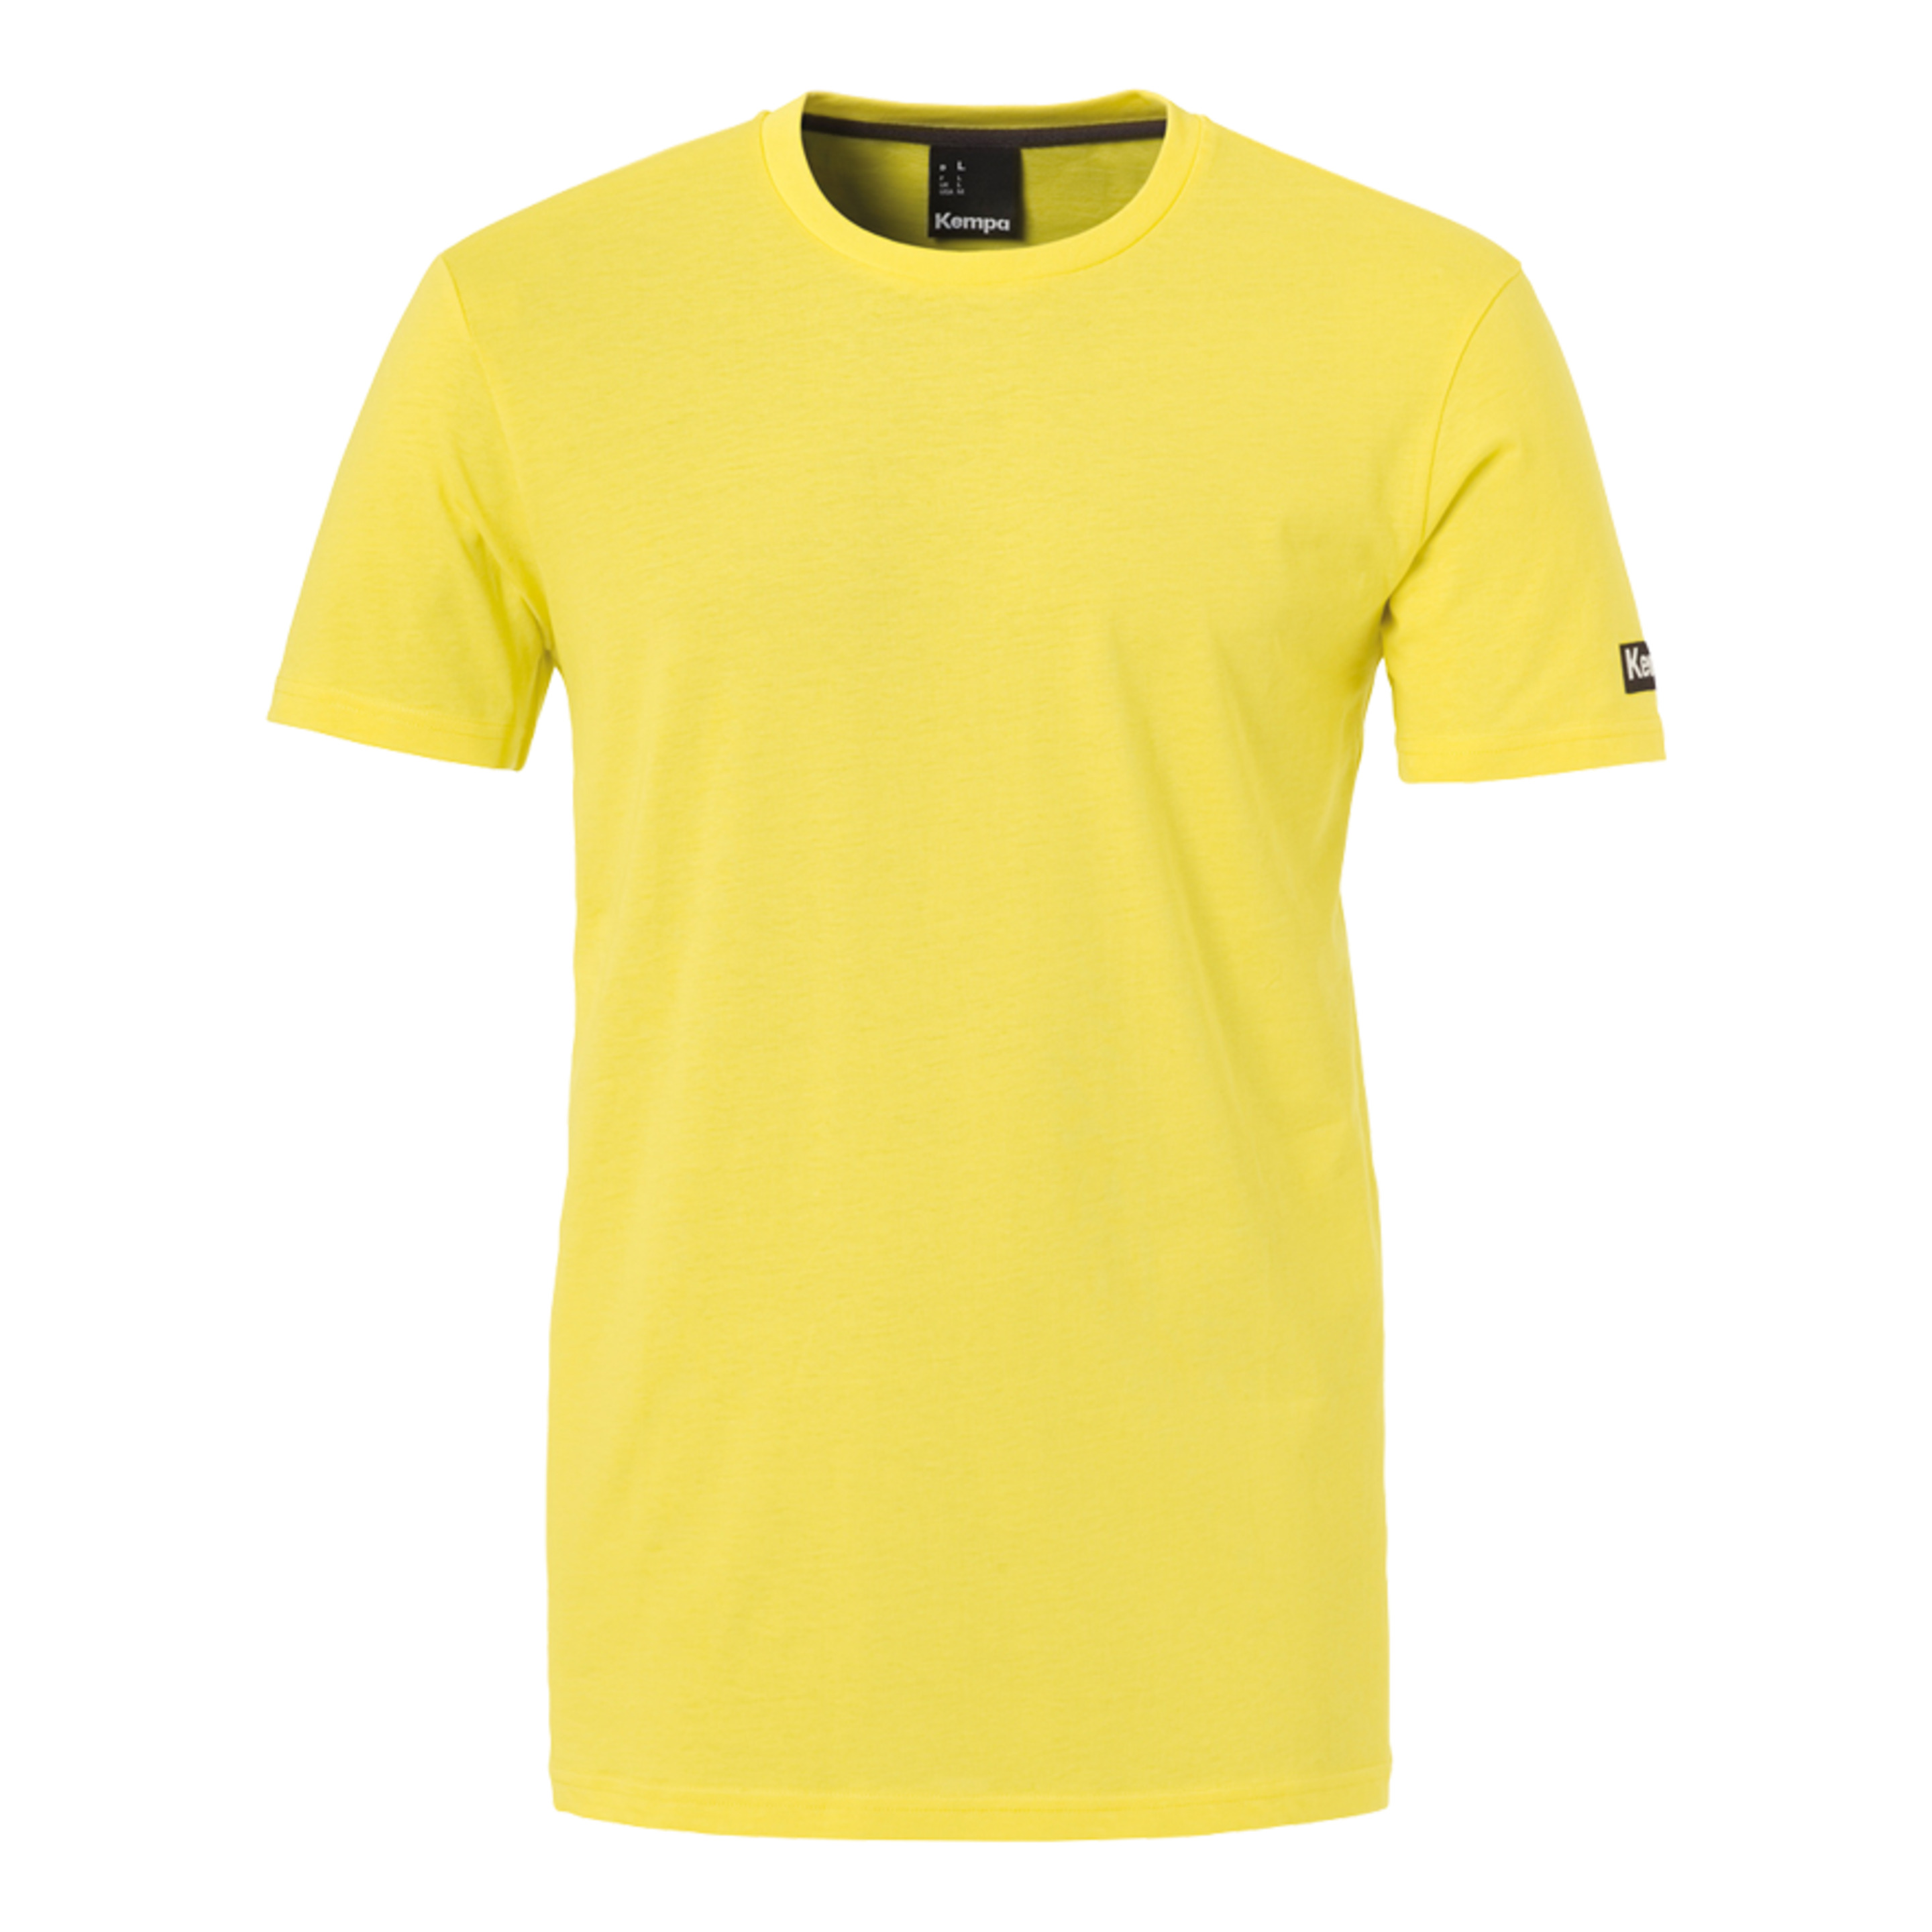 Team Camiseta Lima Amarillo Kempa - amarillo - 